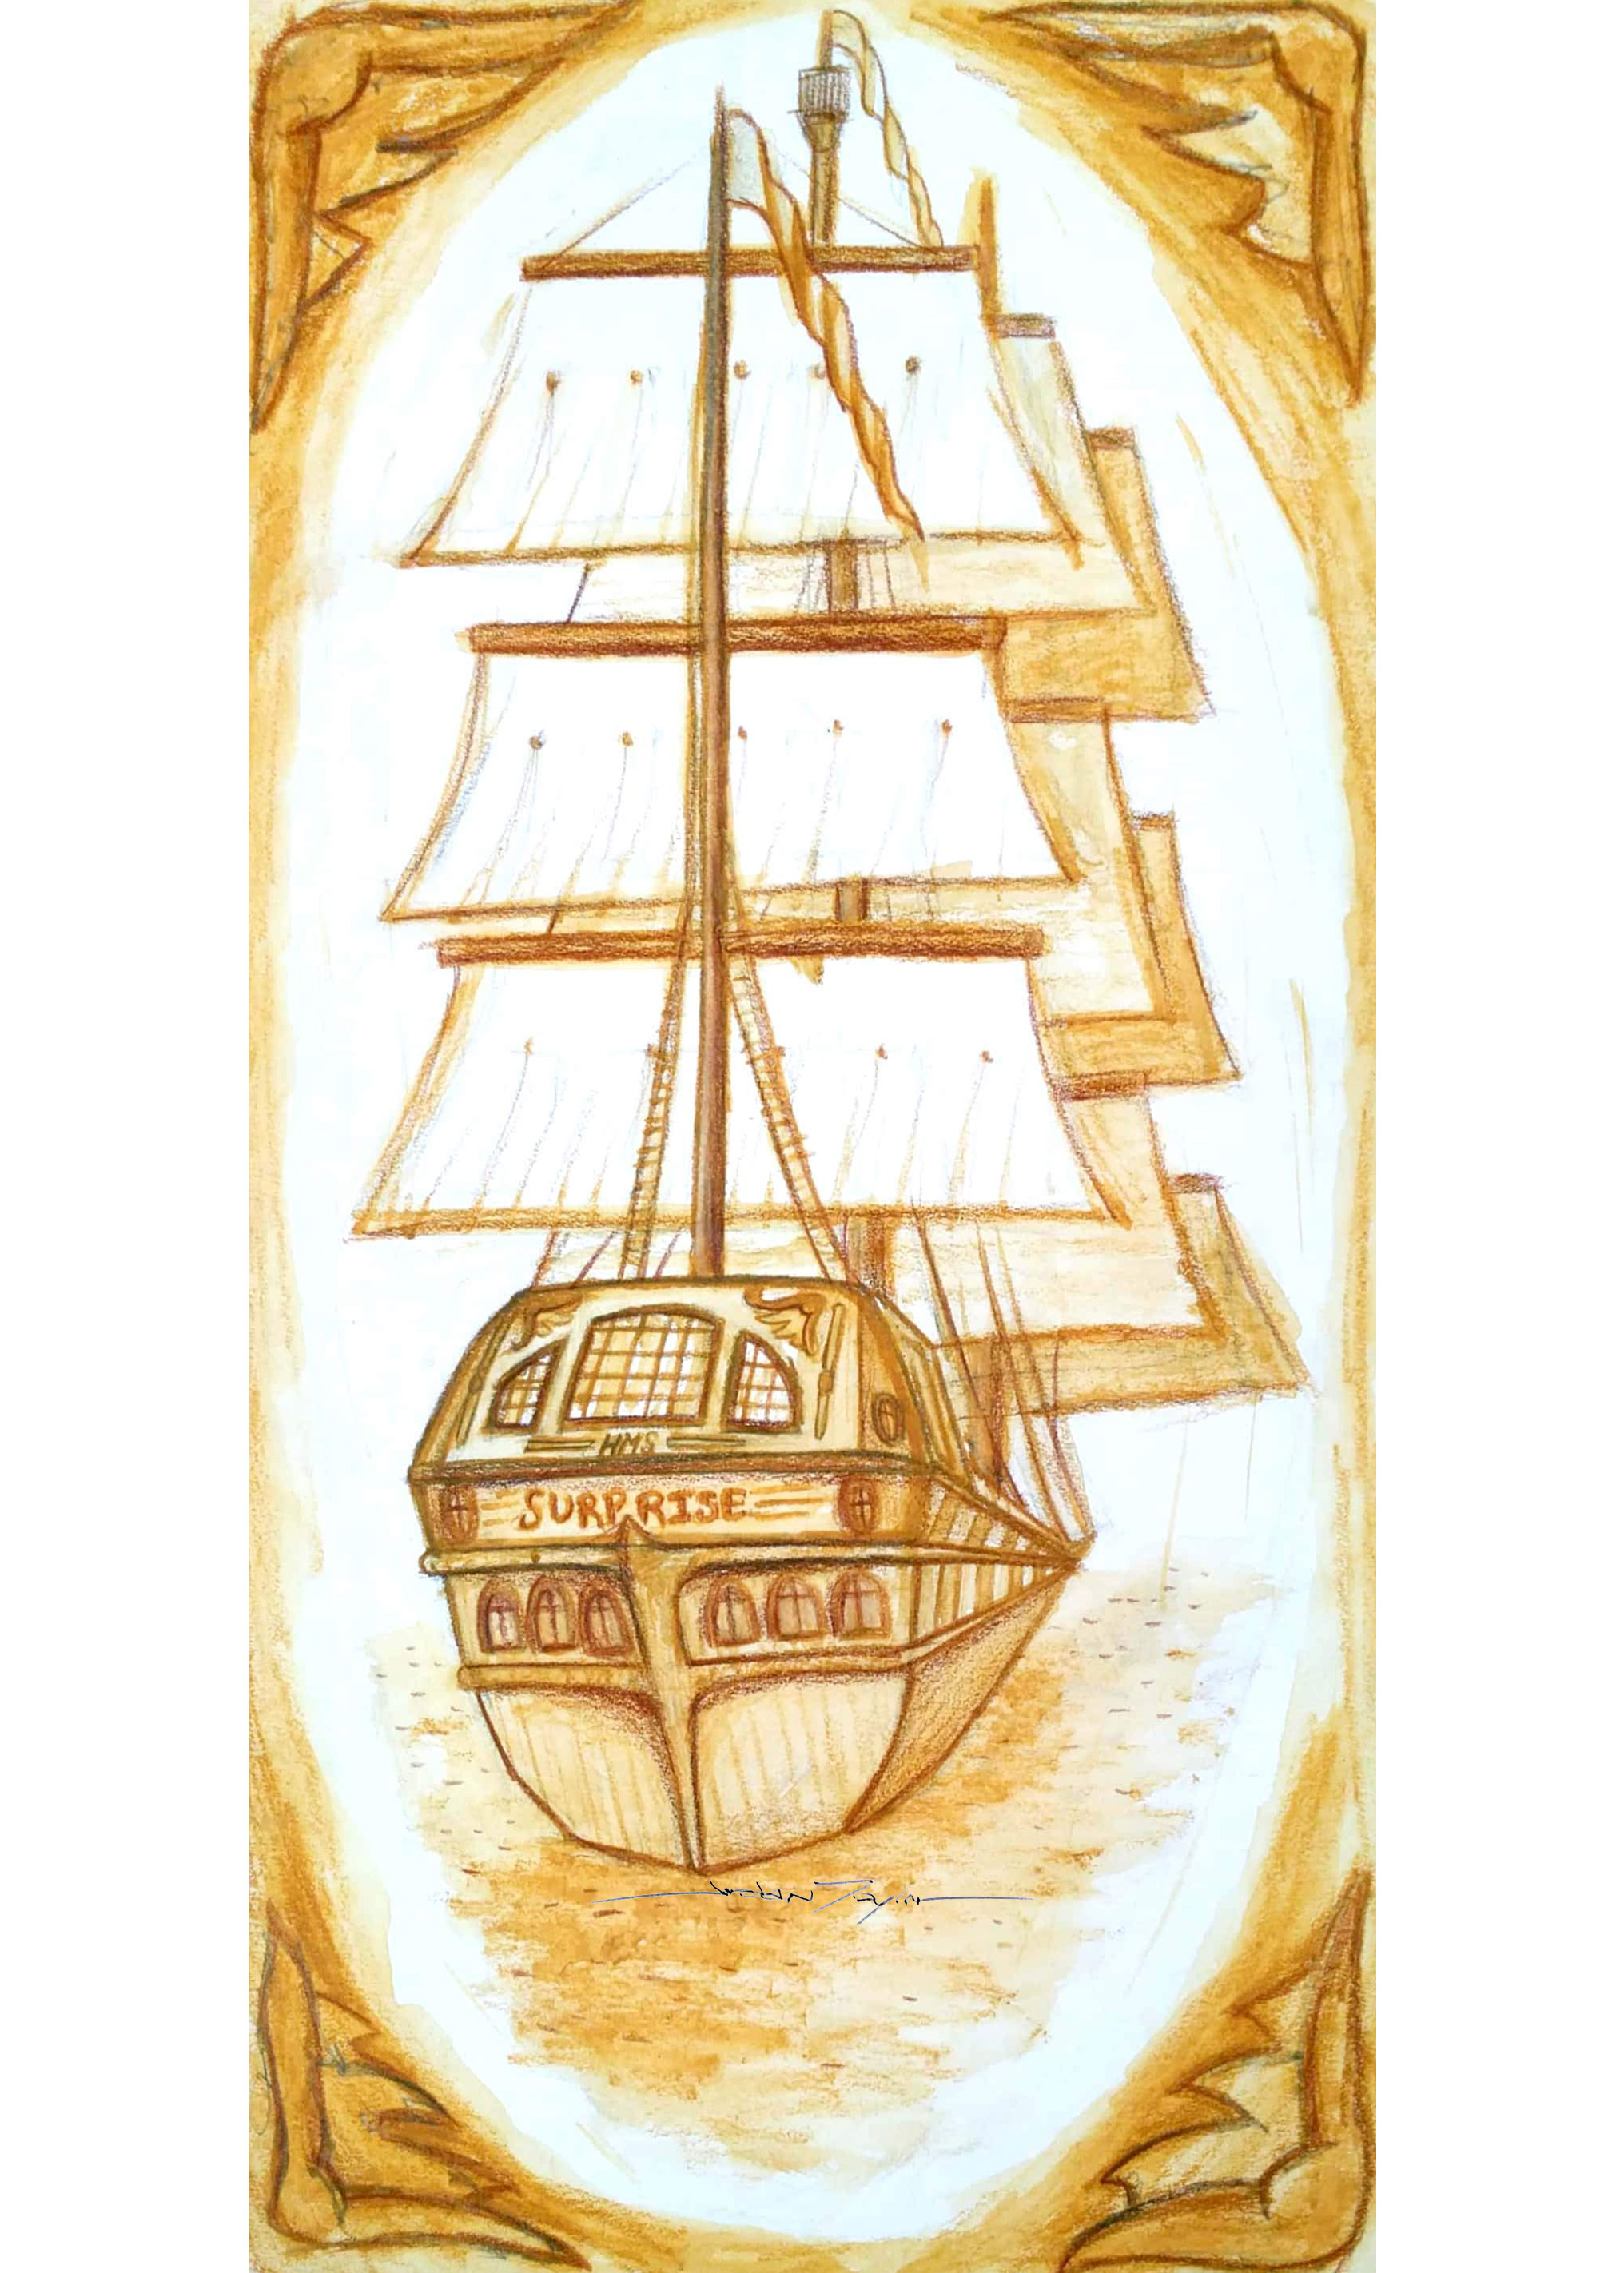 An 18th century ship named 'Surprise' sailing away.